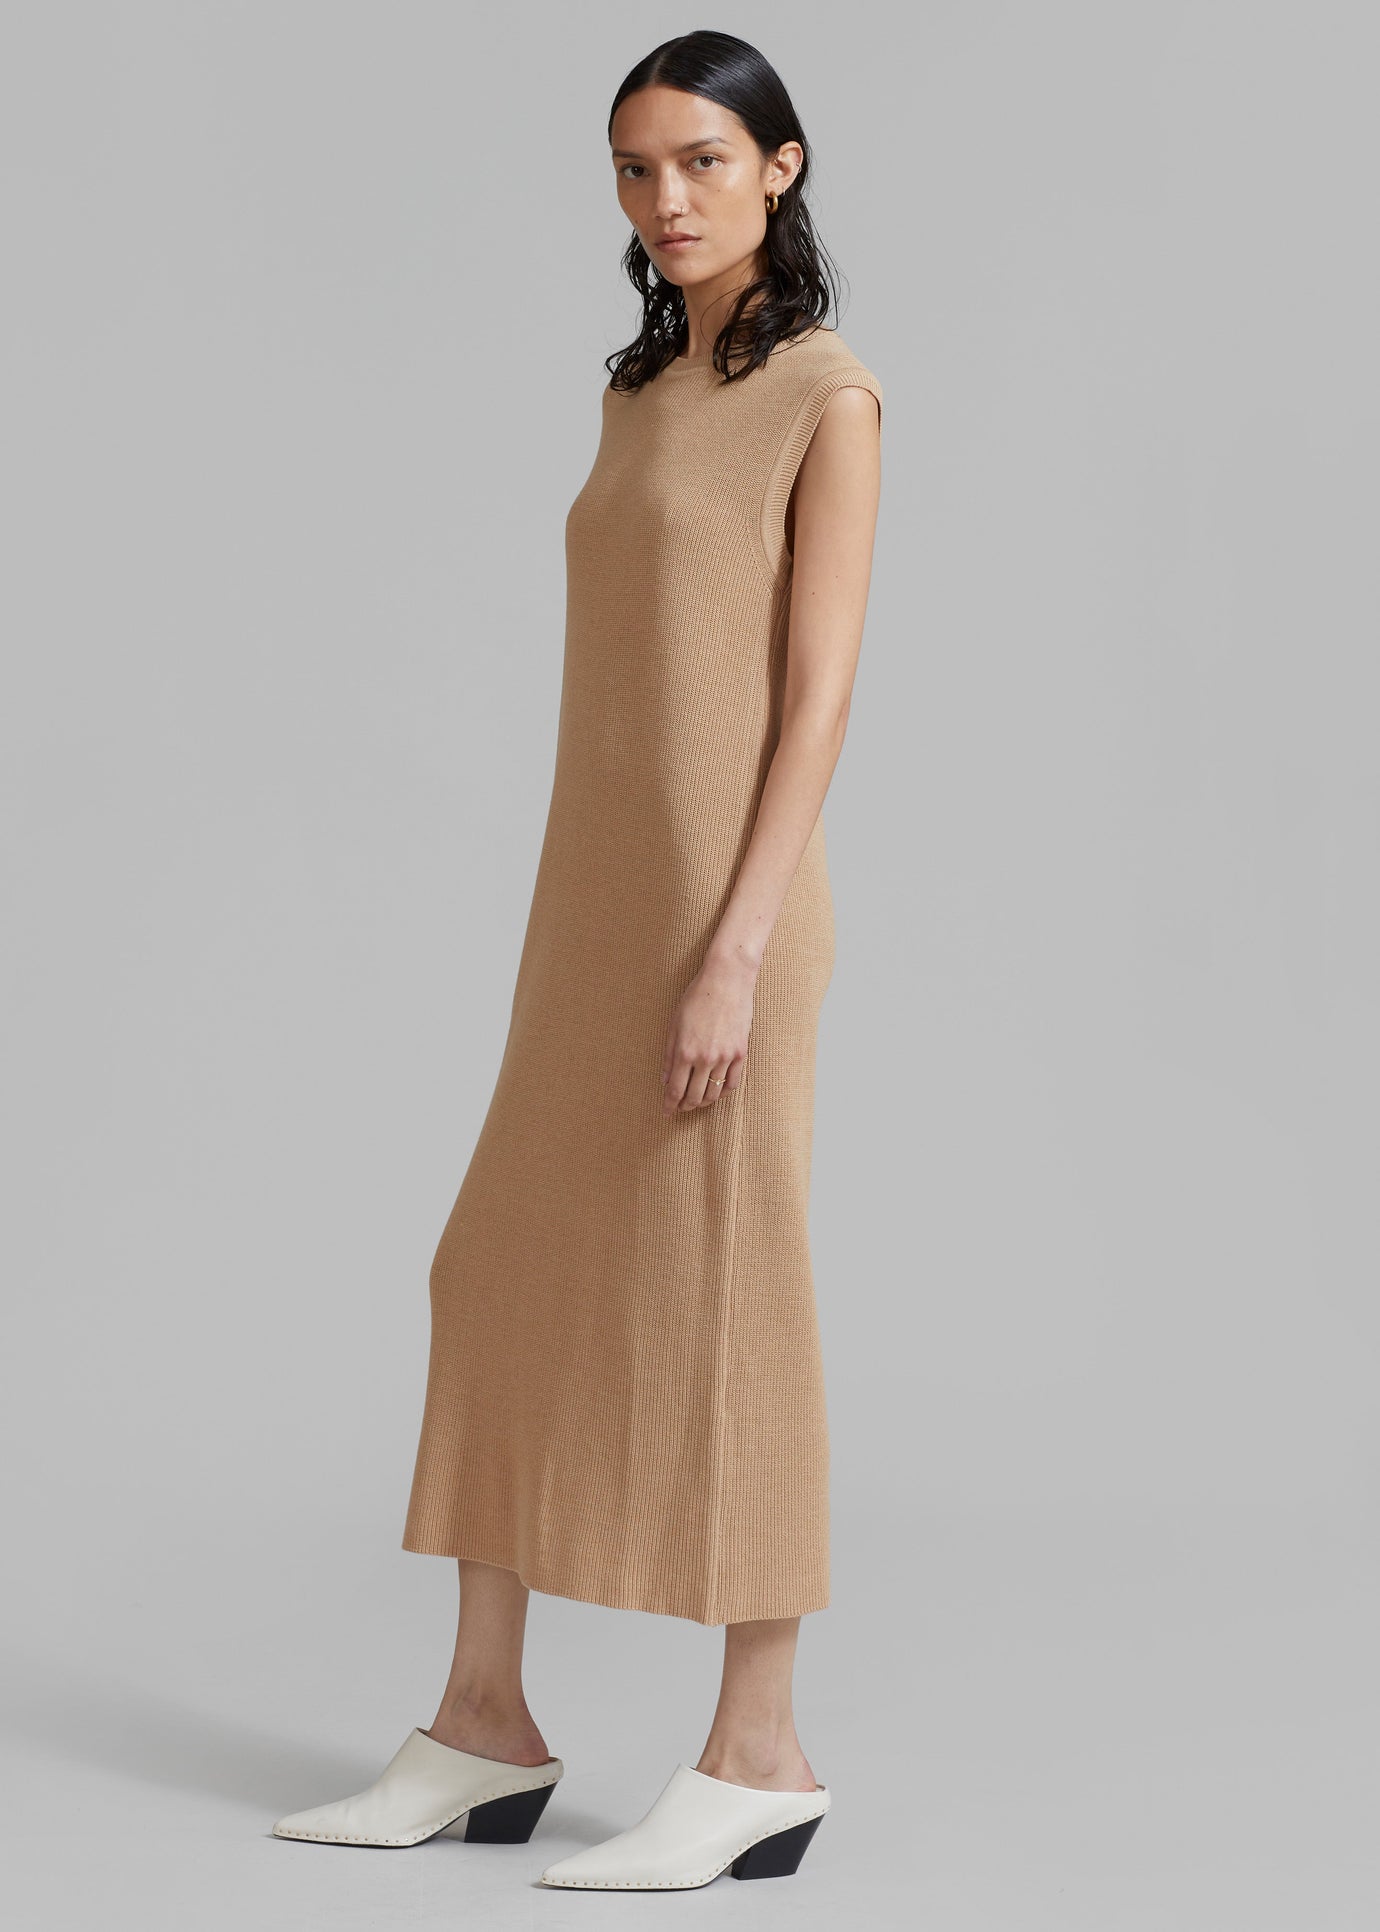 Rosie Knit Dress - Camel